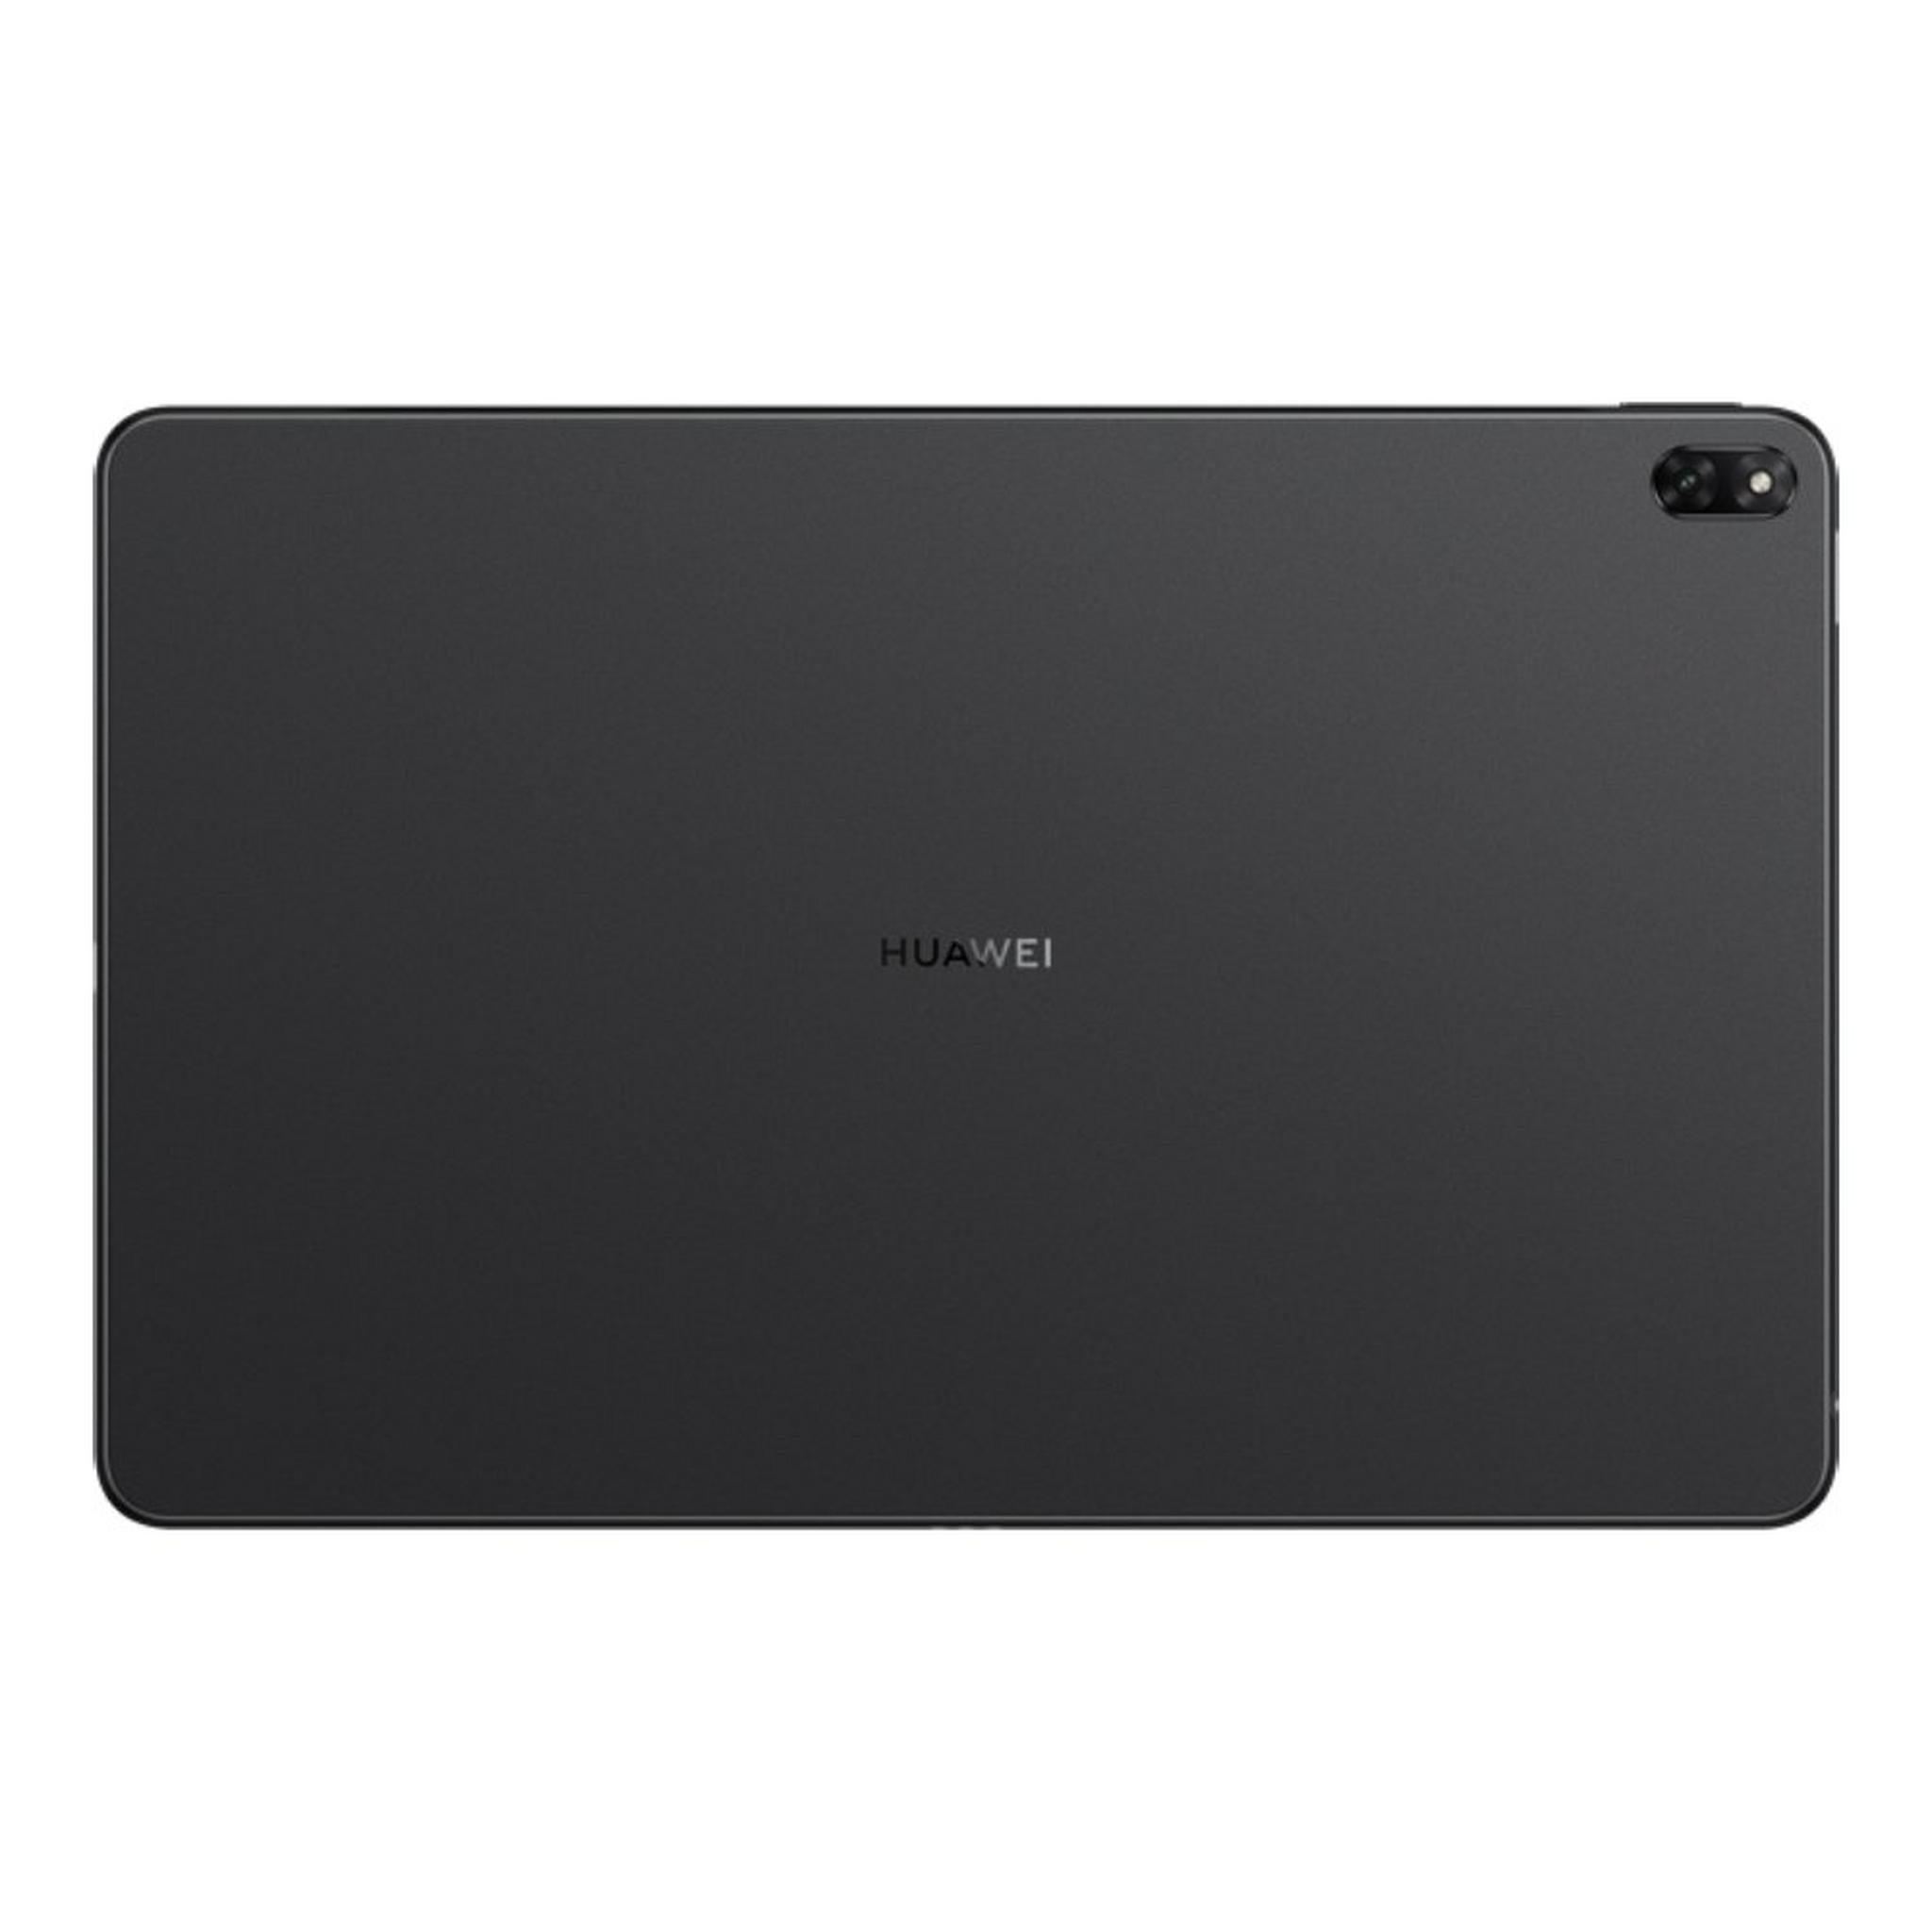 Huawei MateBook E Intel Core i5 11th Gen, 256GB Tablet - Grey